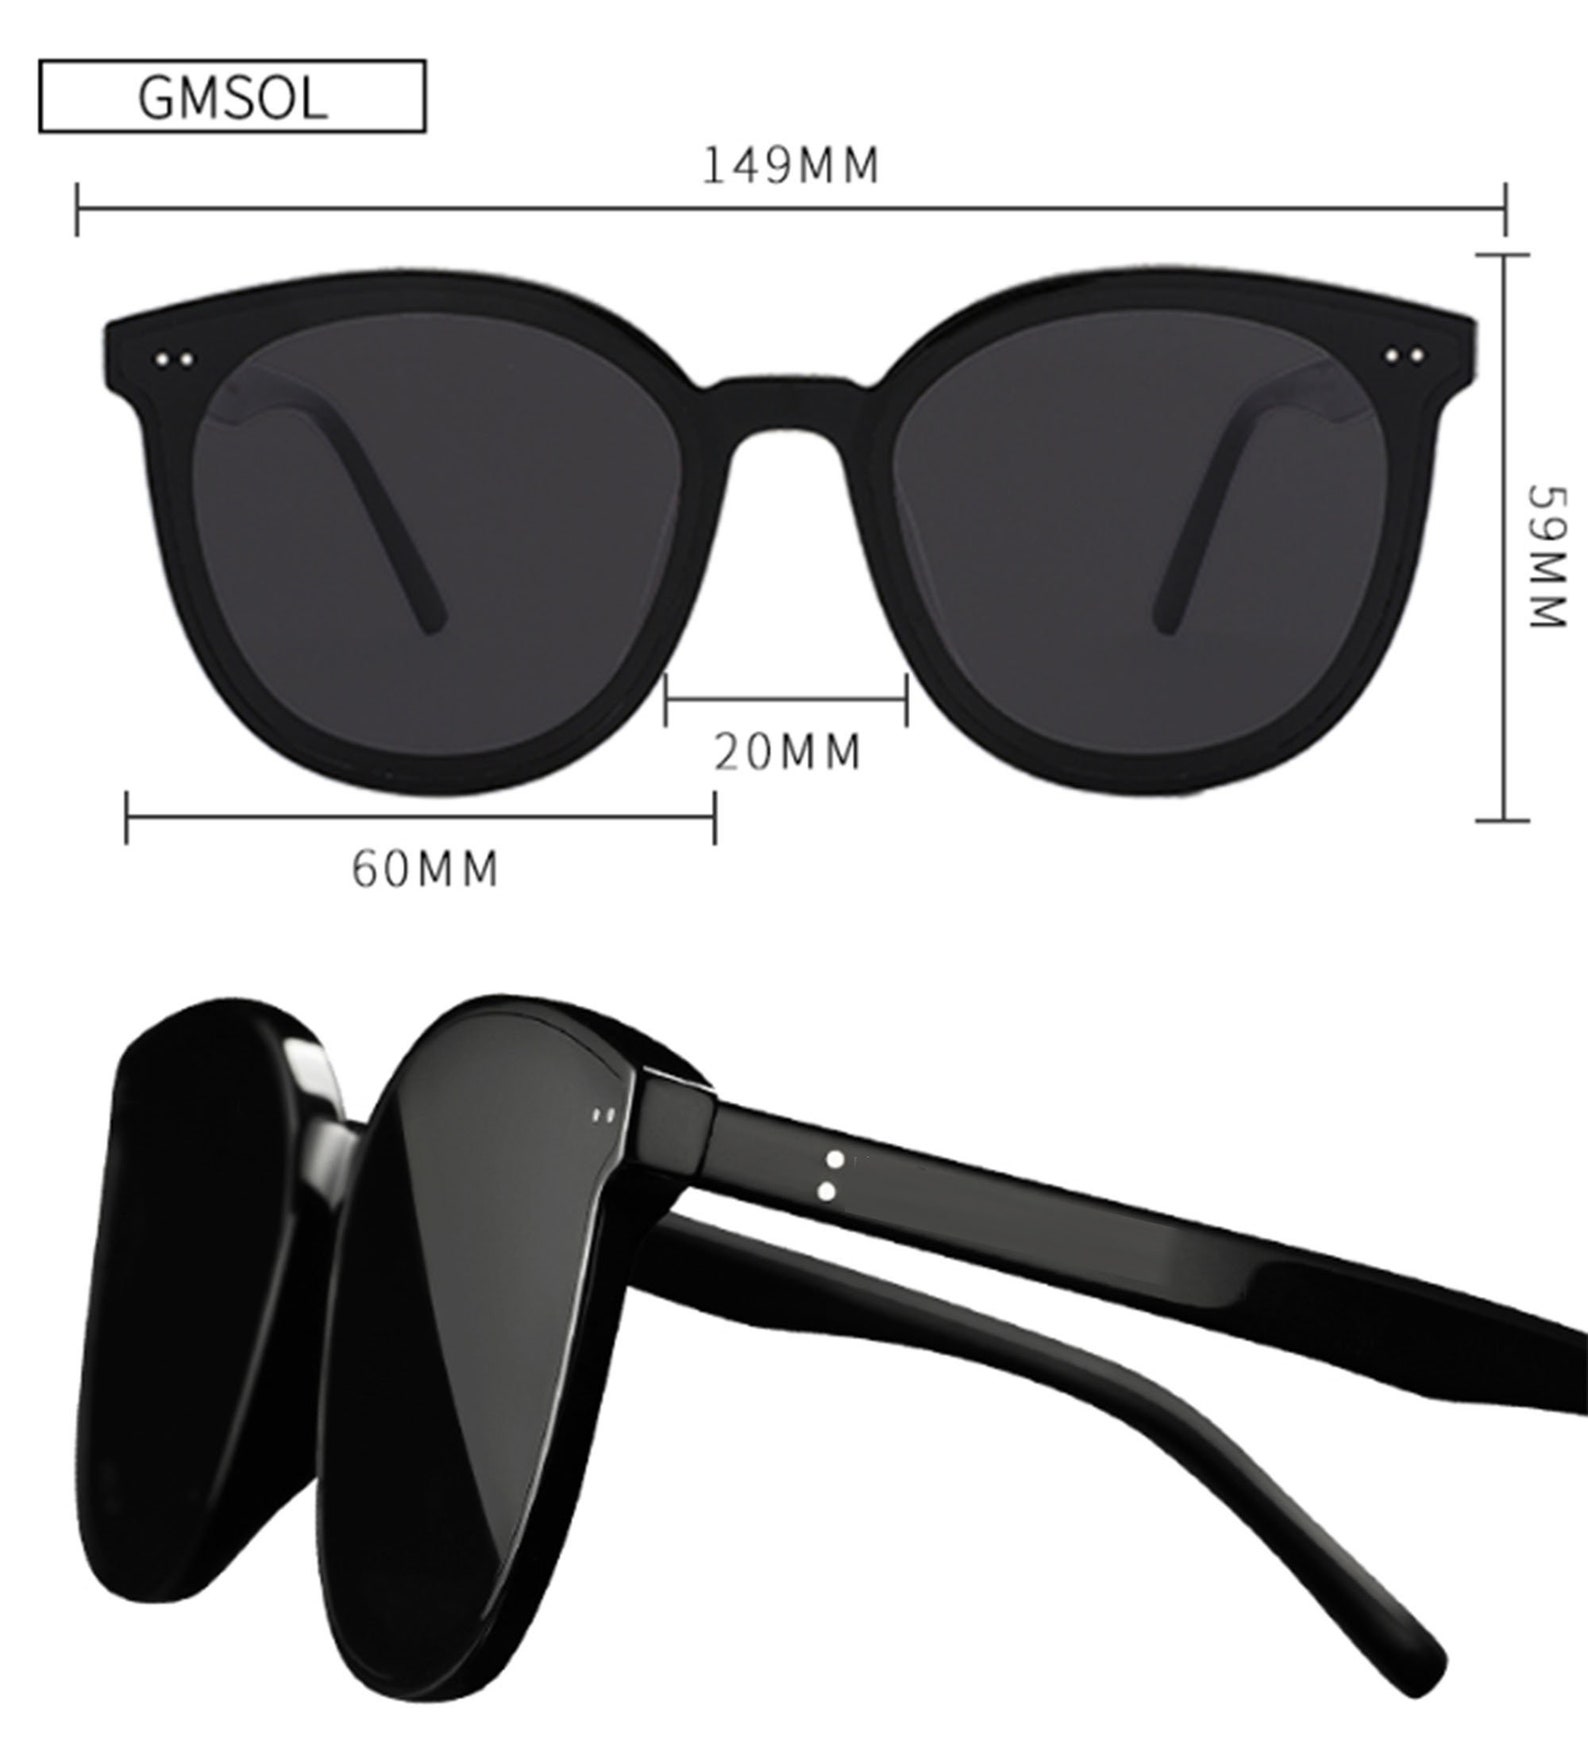 GM sunglasses womenLarge Thick Frame Fashion SunglassesUV | Etsy